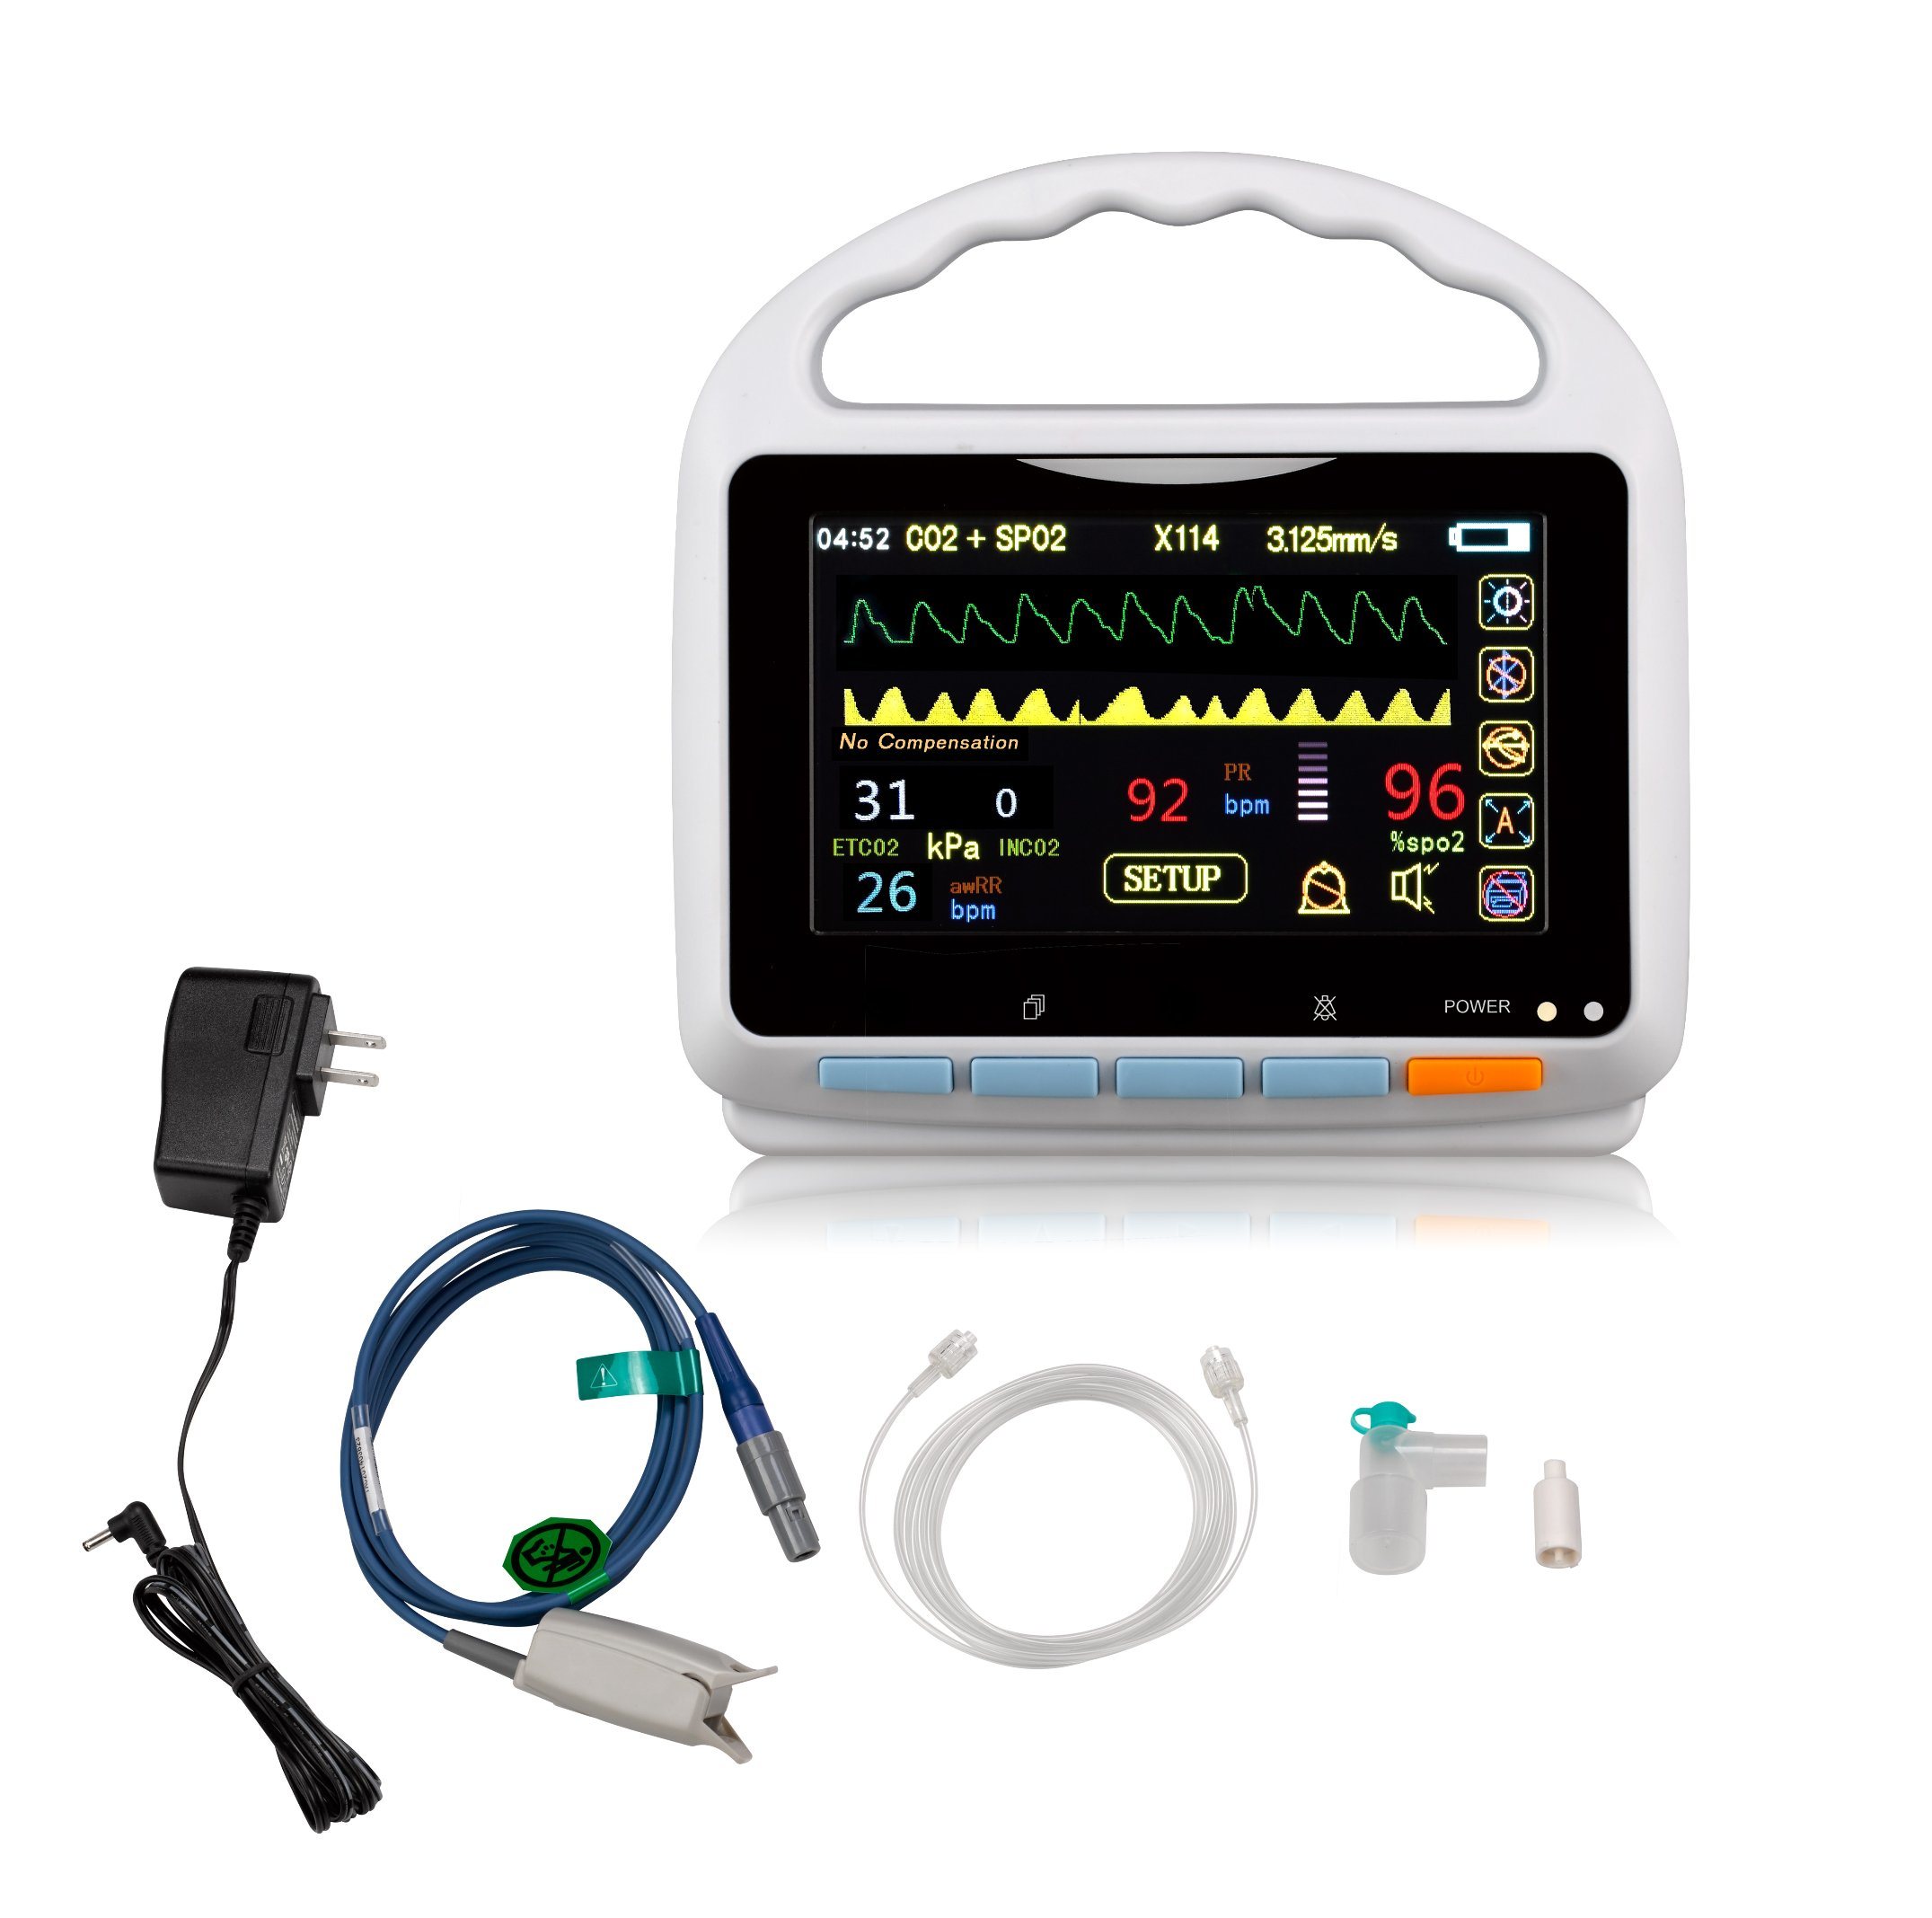 Hm-07 Vital Signs Patient Monitor (ETCO2+SpO2 patient monitor)